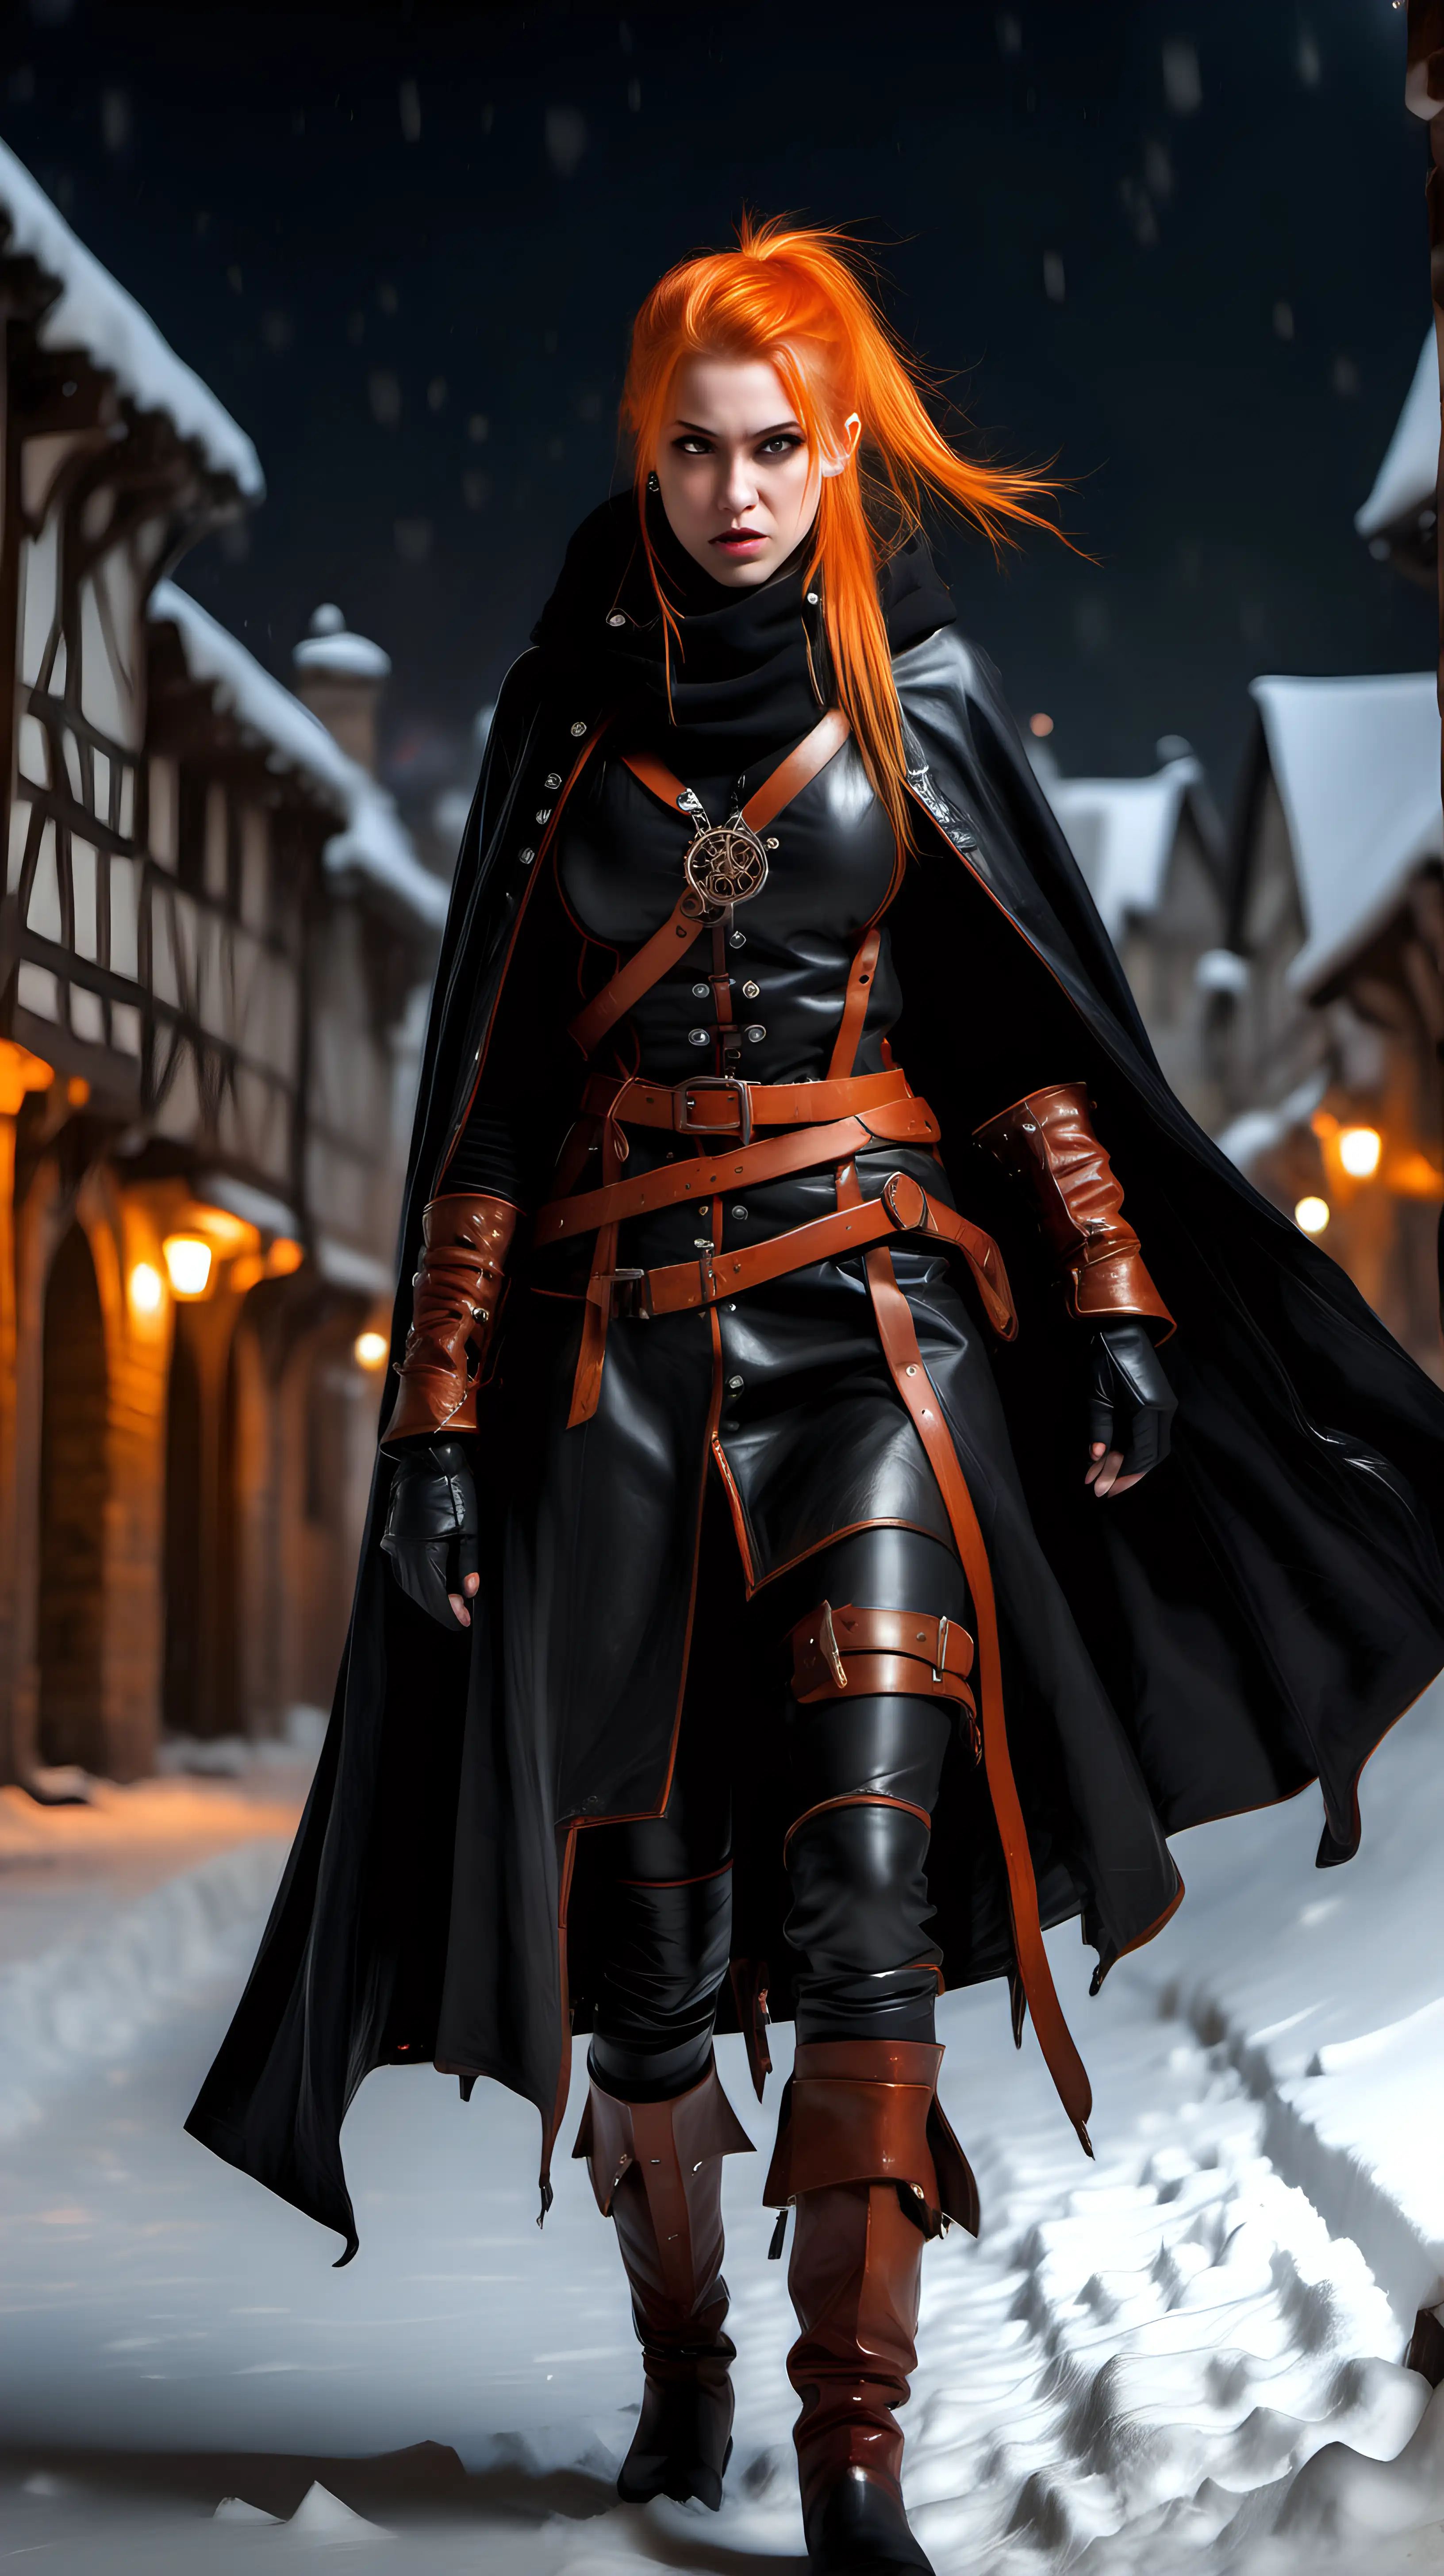 Fierce Female Rogue Braving a Snowy Medieval Night